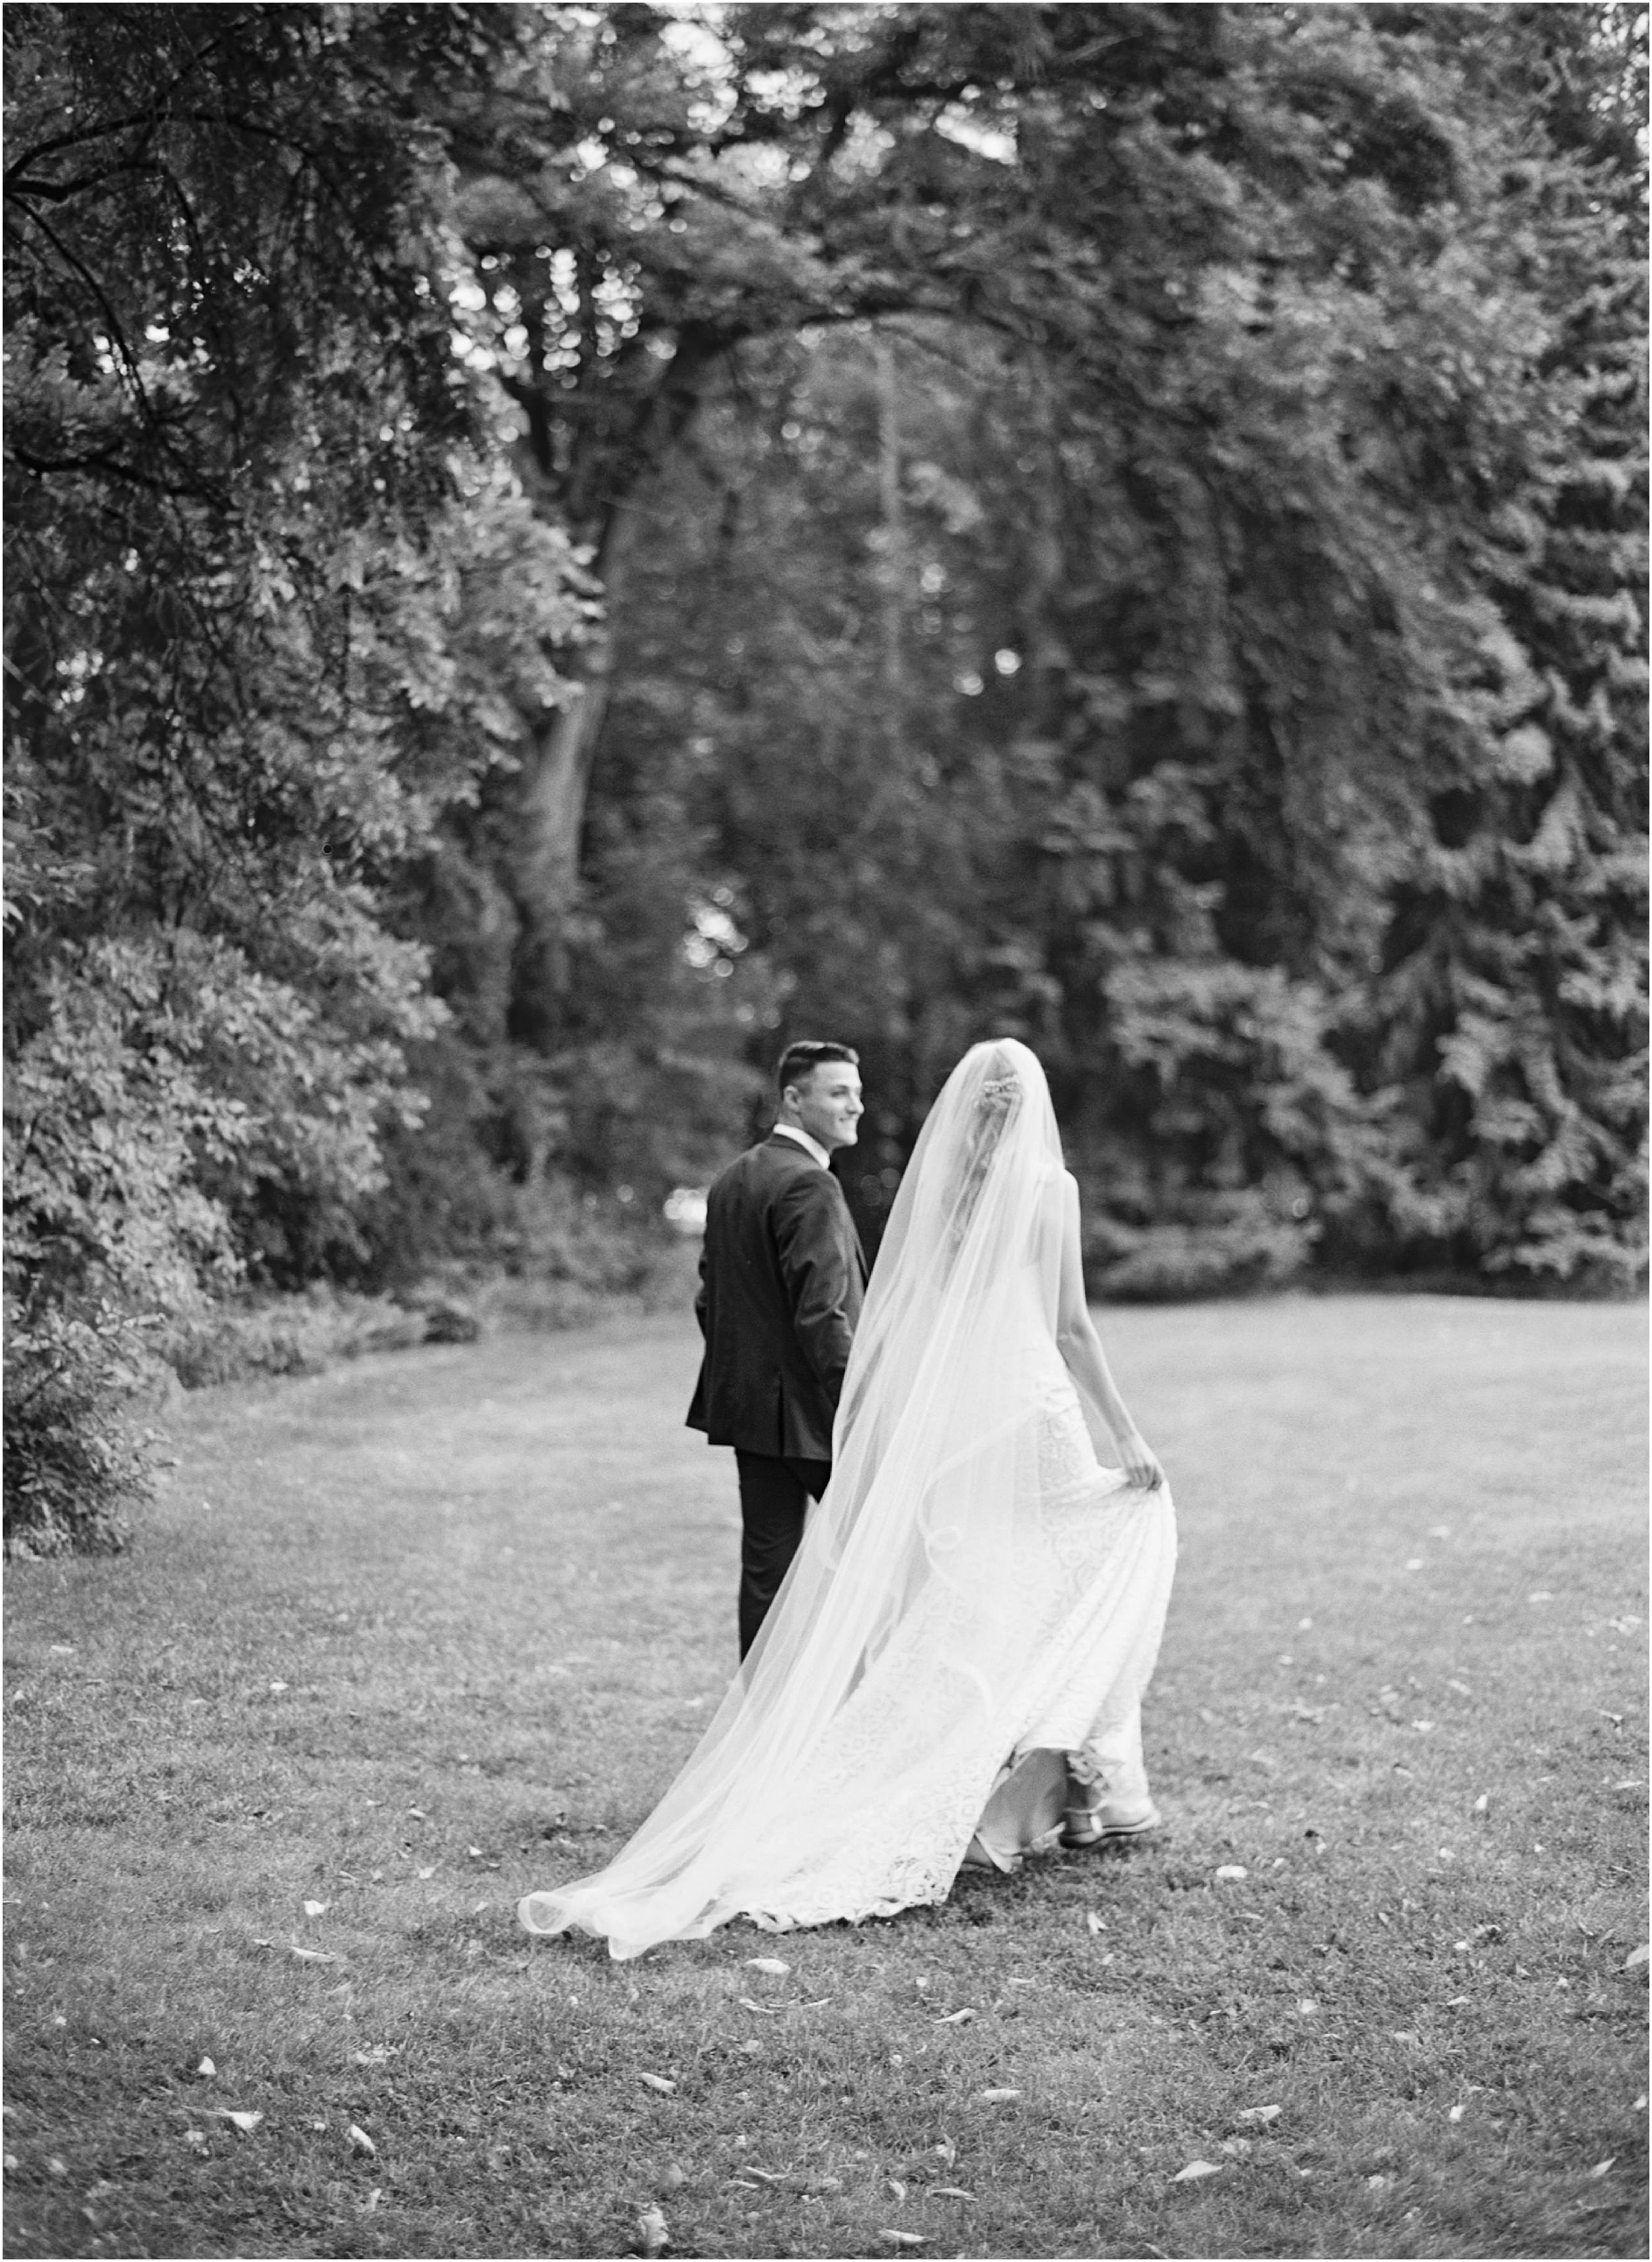  ©Jeremiah & Rachel Photography

www.jeremiahandrachel.com

Norland Historic Estate Wedding





 